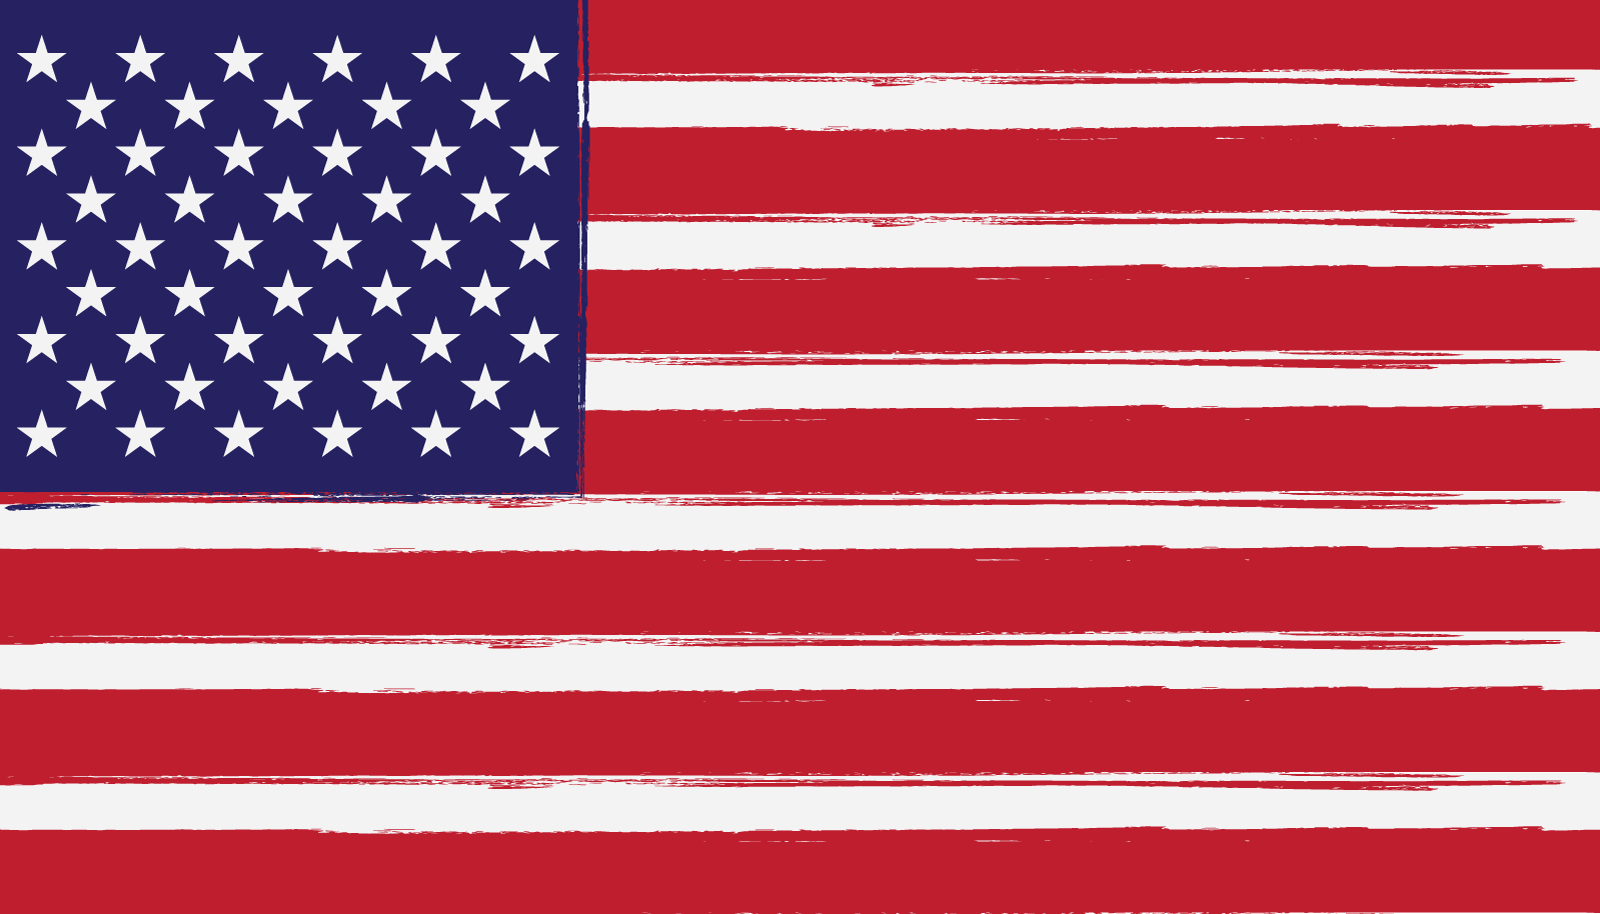 American flag illustration vector flat design template